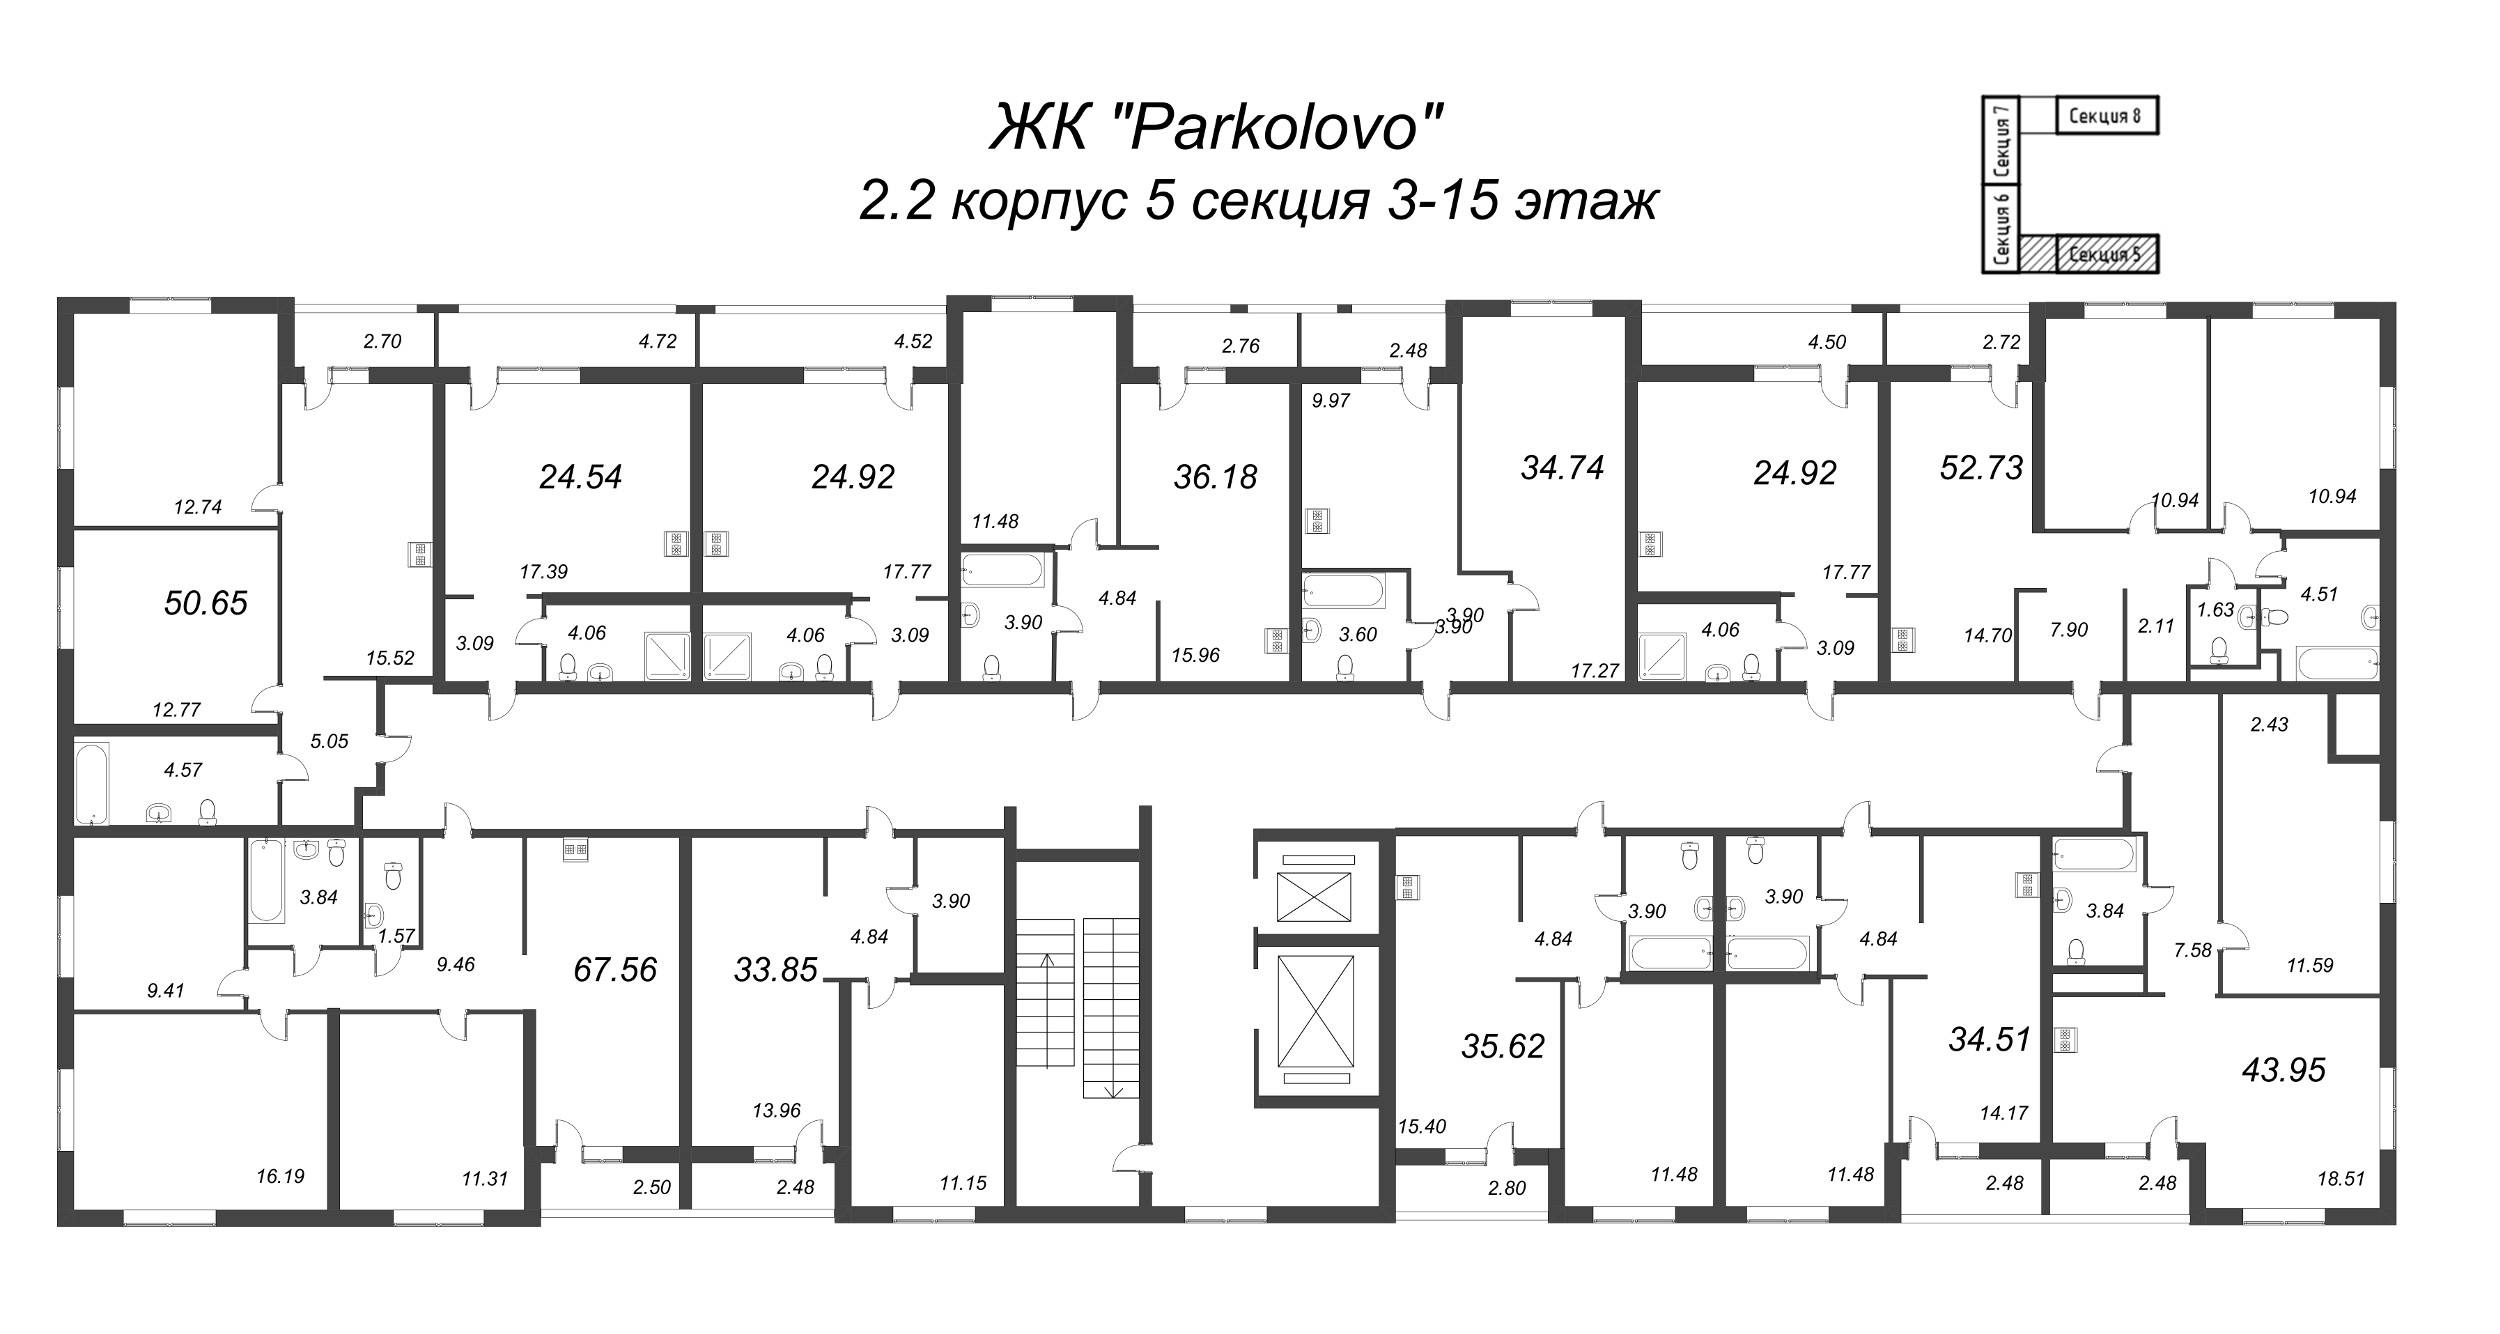 2-комнатная (Евро) квартира, 43.95 м² - планировка этажа